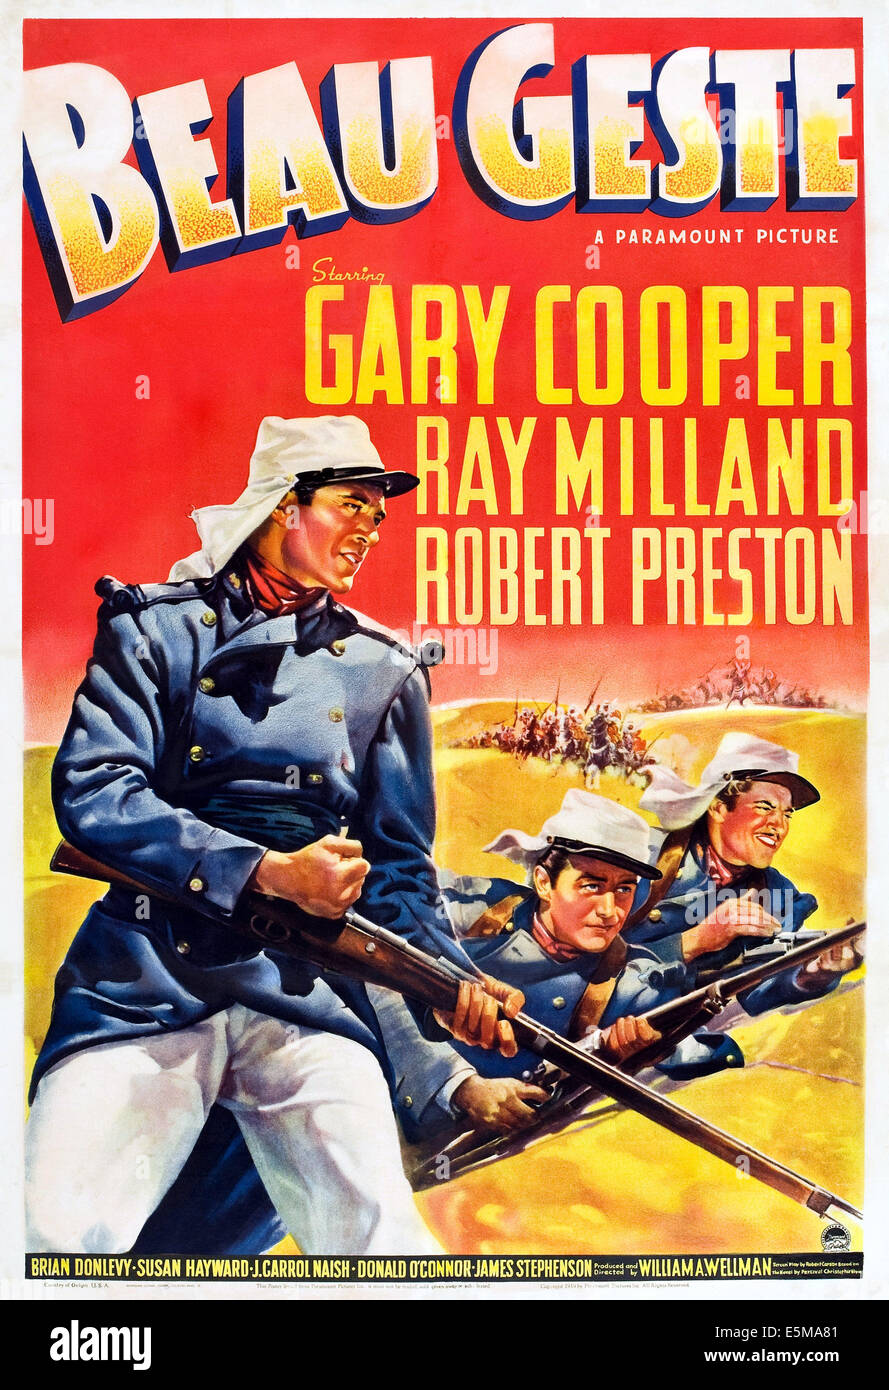 BEAU GESTE, US poster art, from left: Gary Cooper, Ray Milland, Robert Preston, 1939 Stock Photo